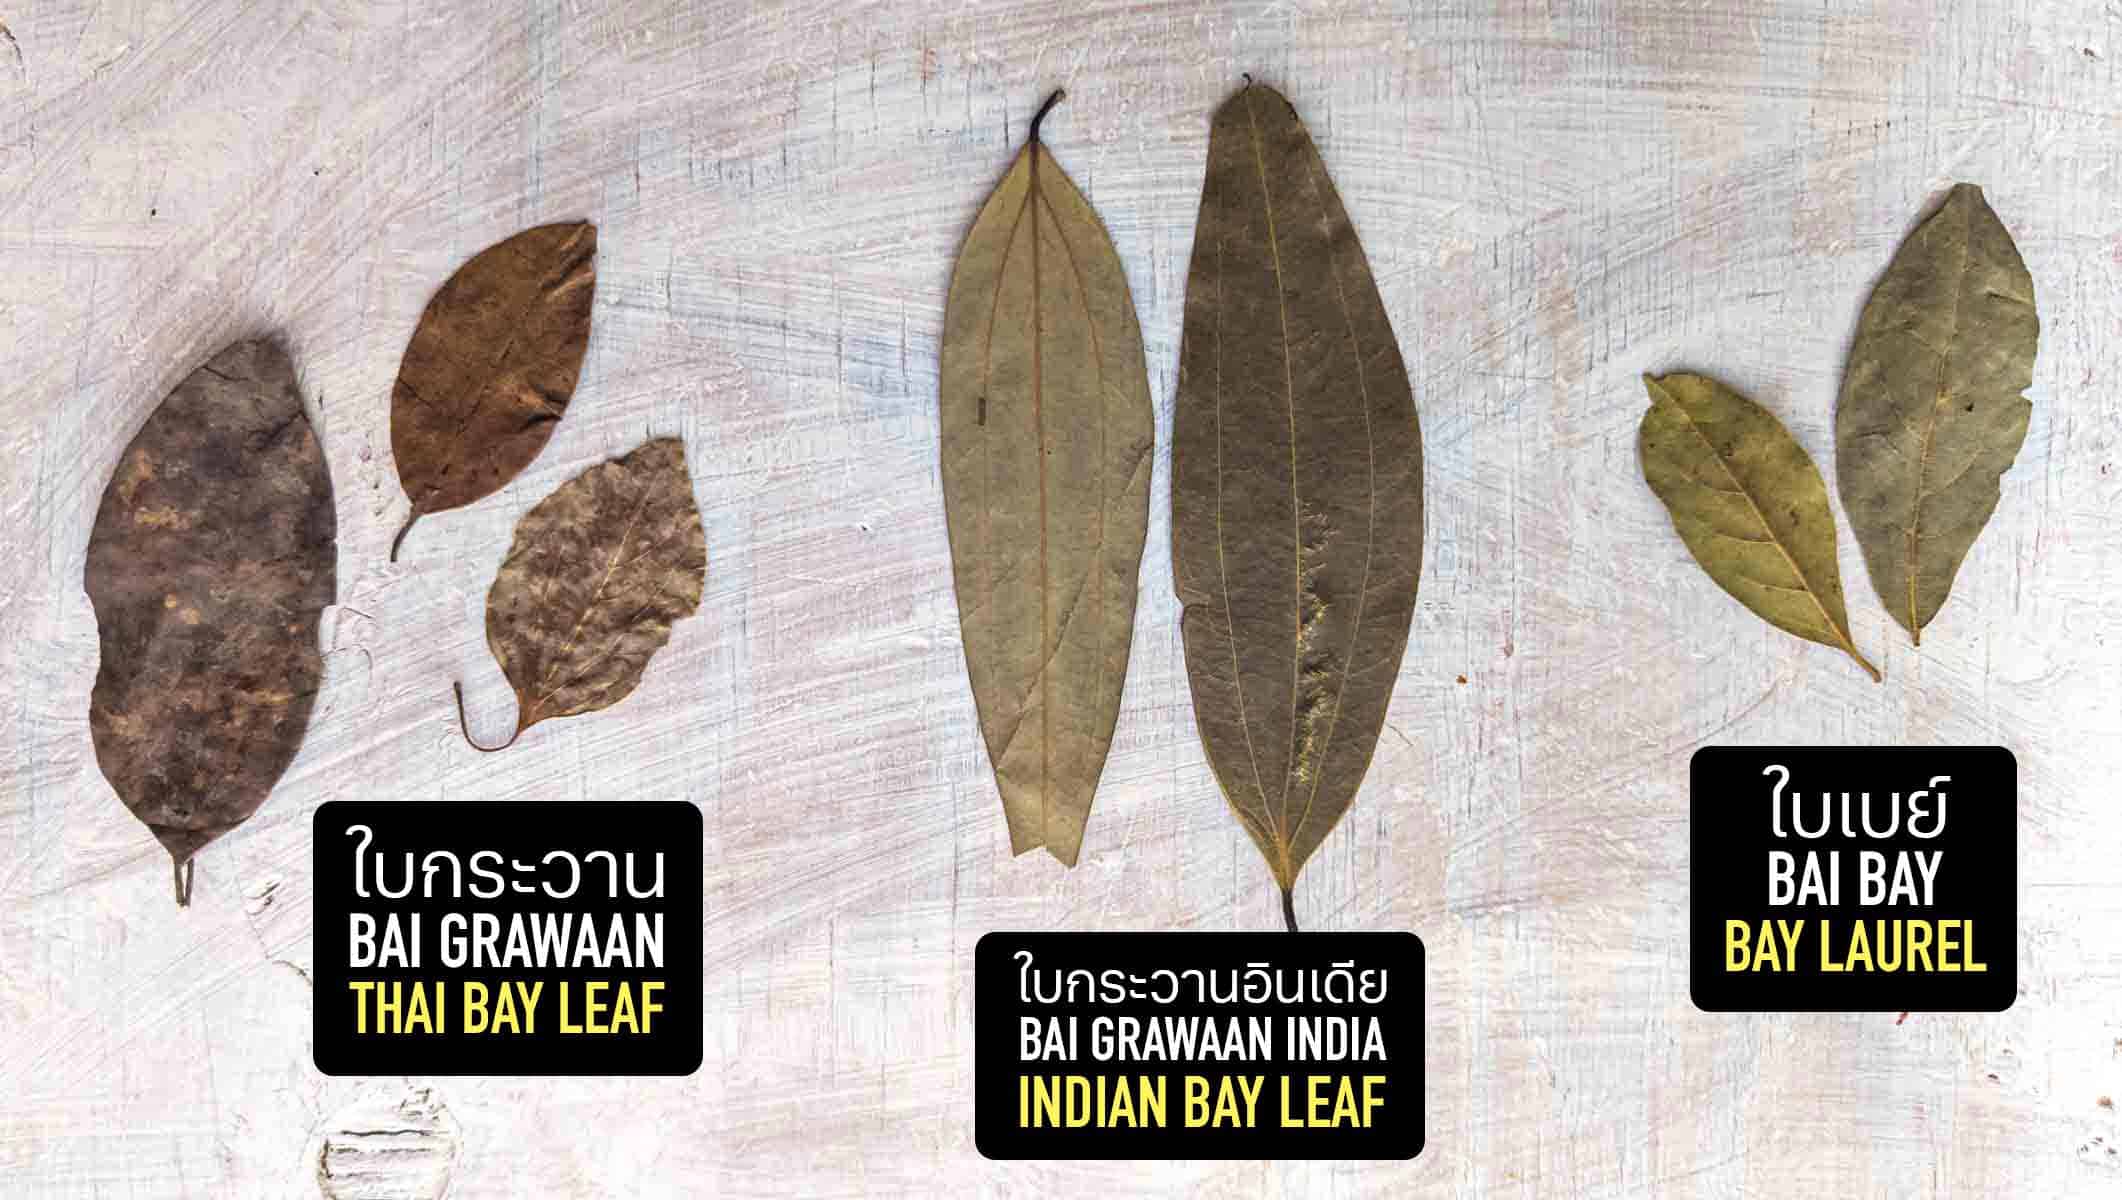 Thai bay leaf, Indian bay leaf, and bay laurel